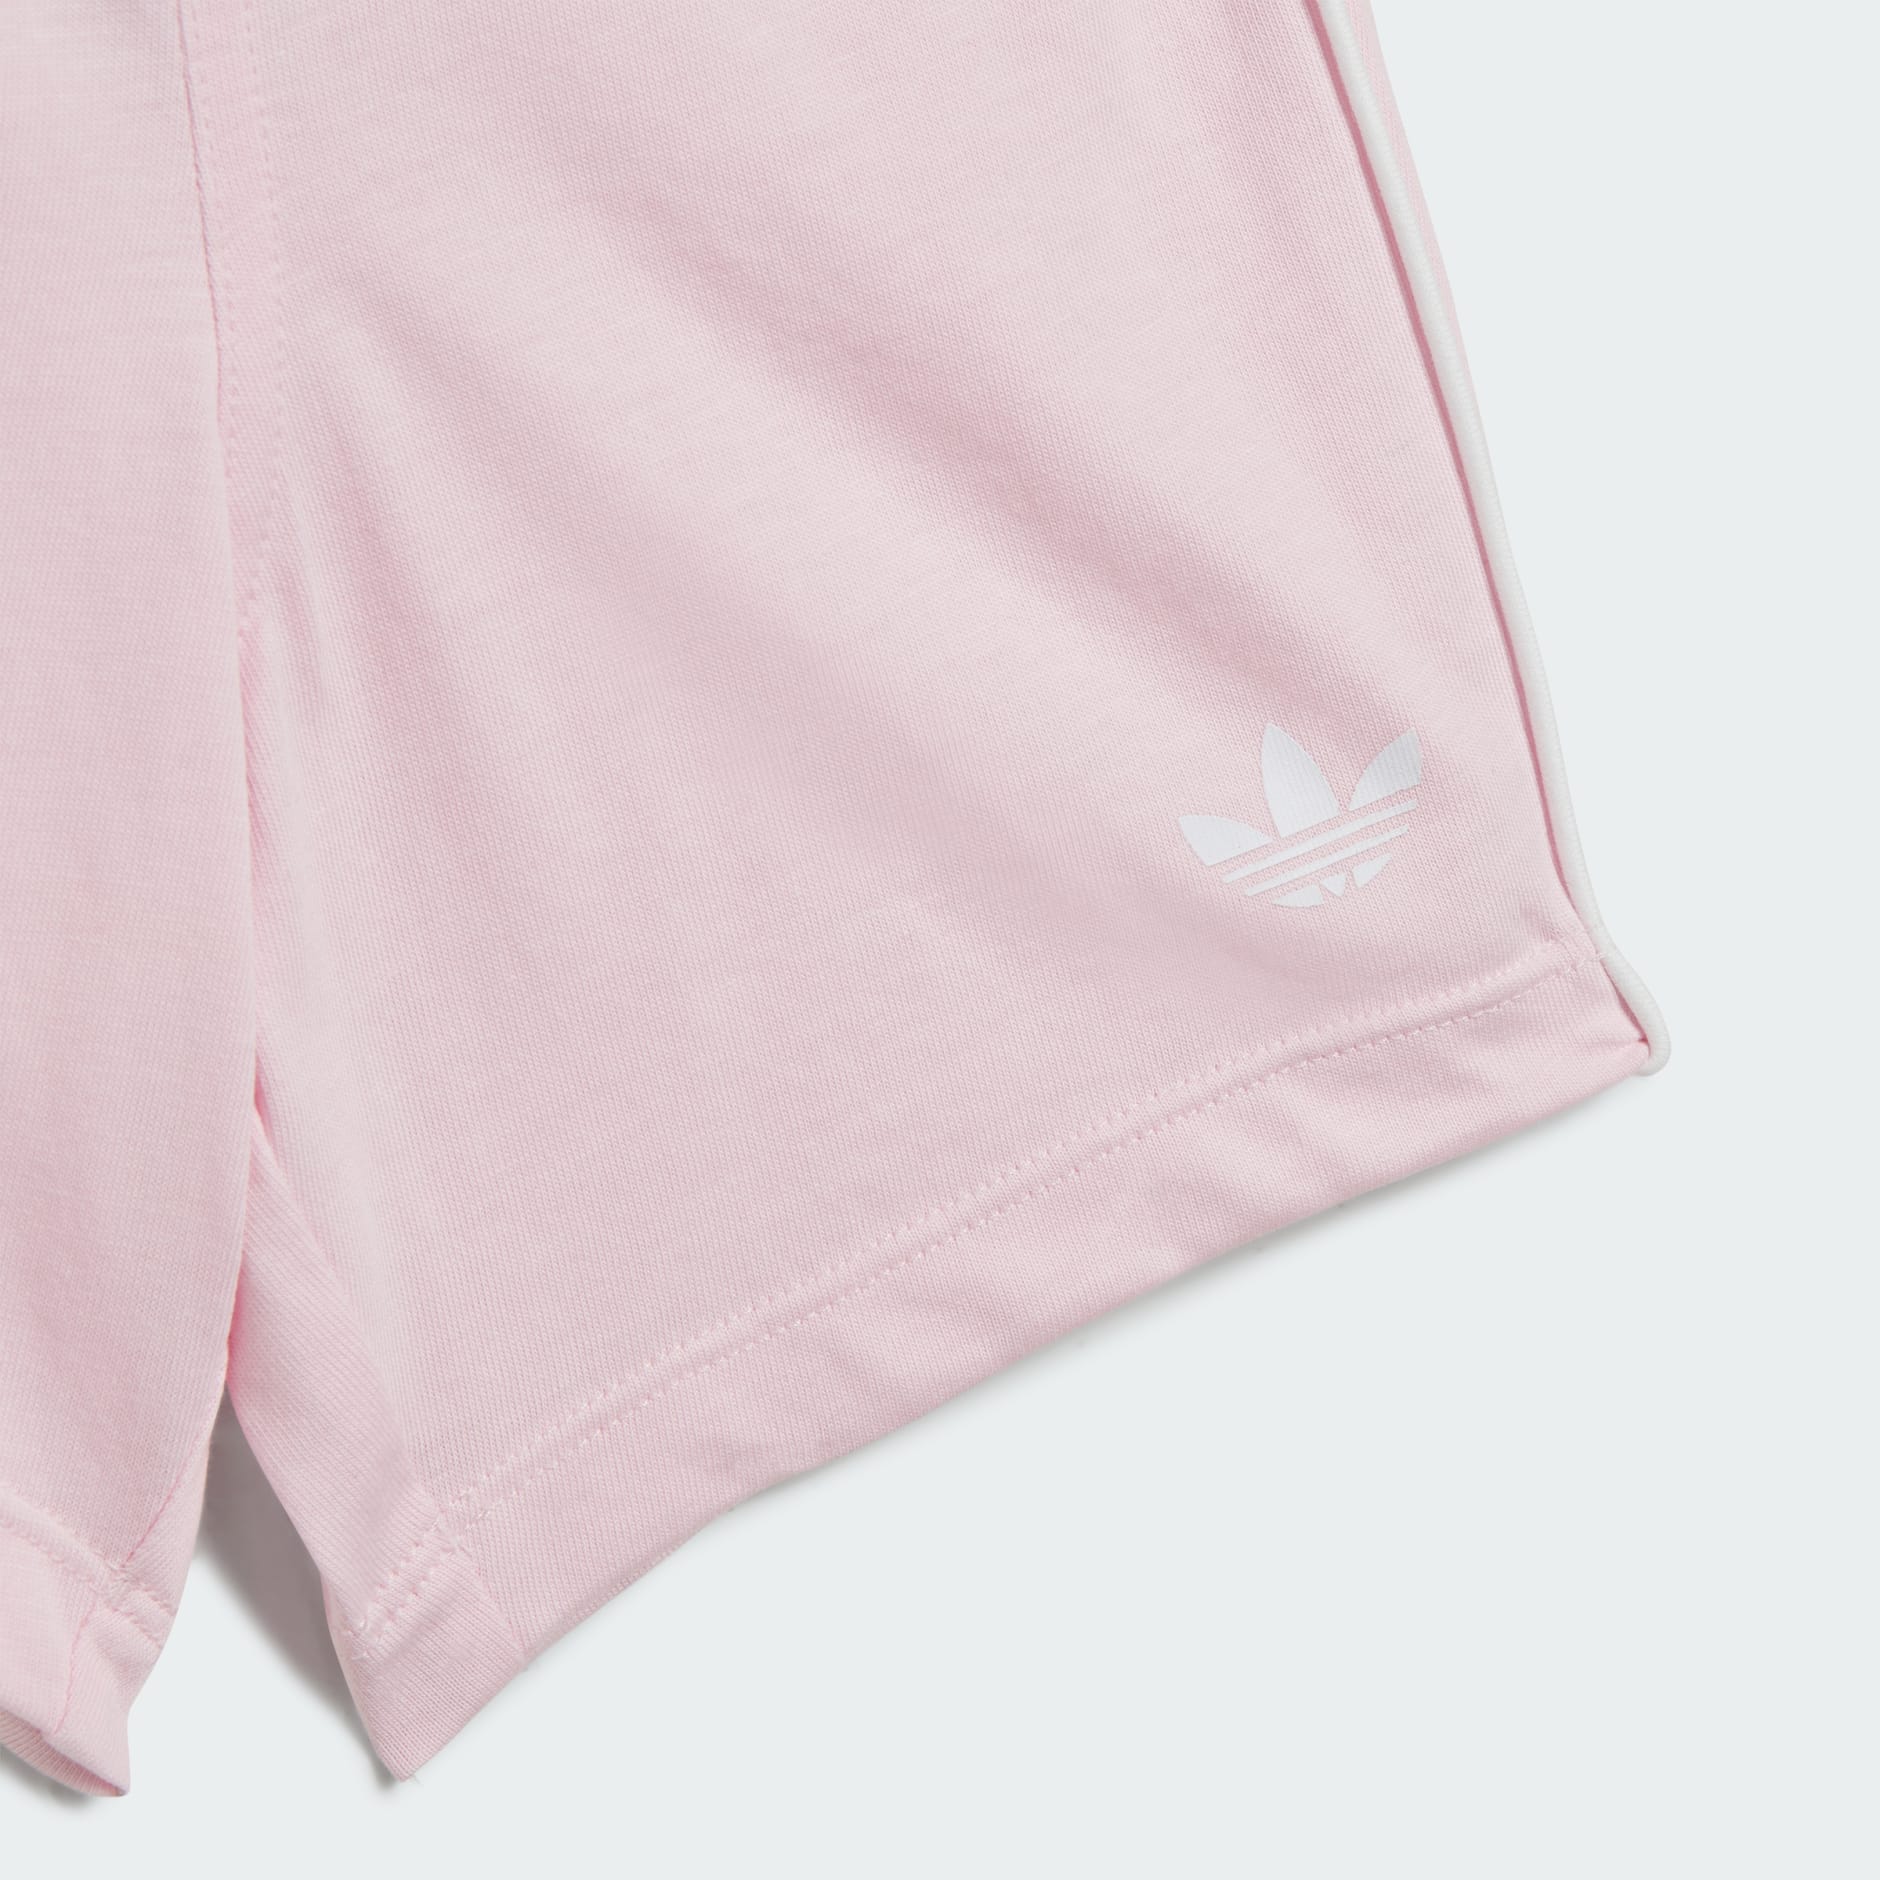 adidas Adicolor Shorts and Tee Set - Pink | adidas UAE